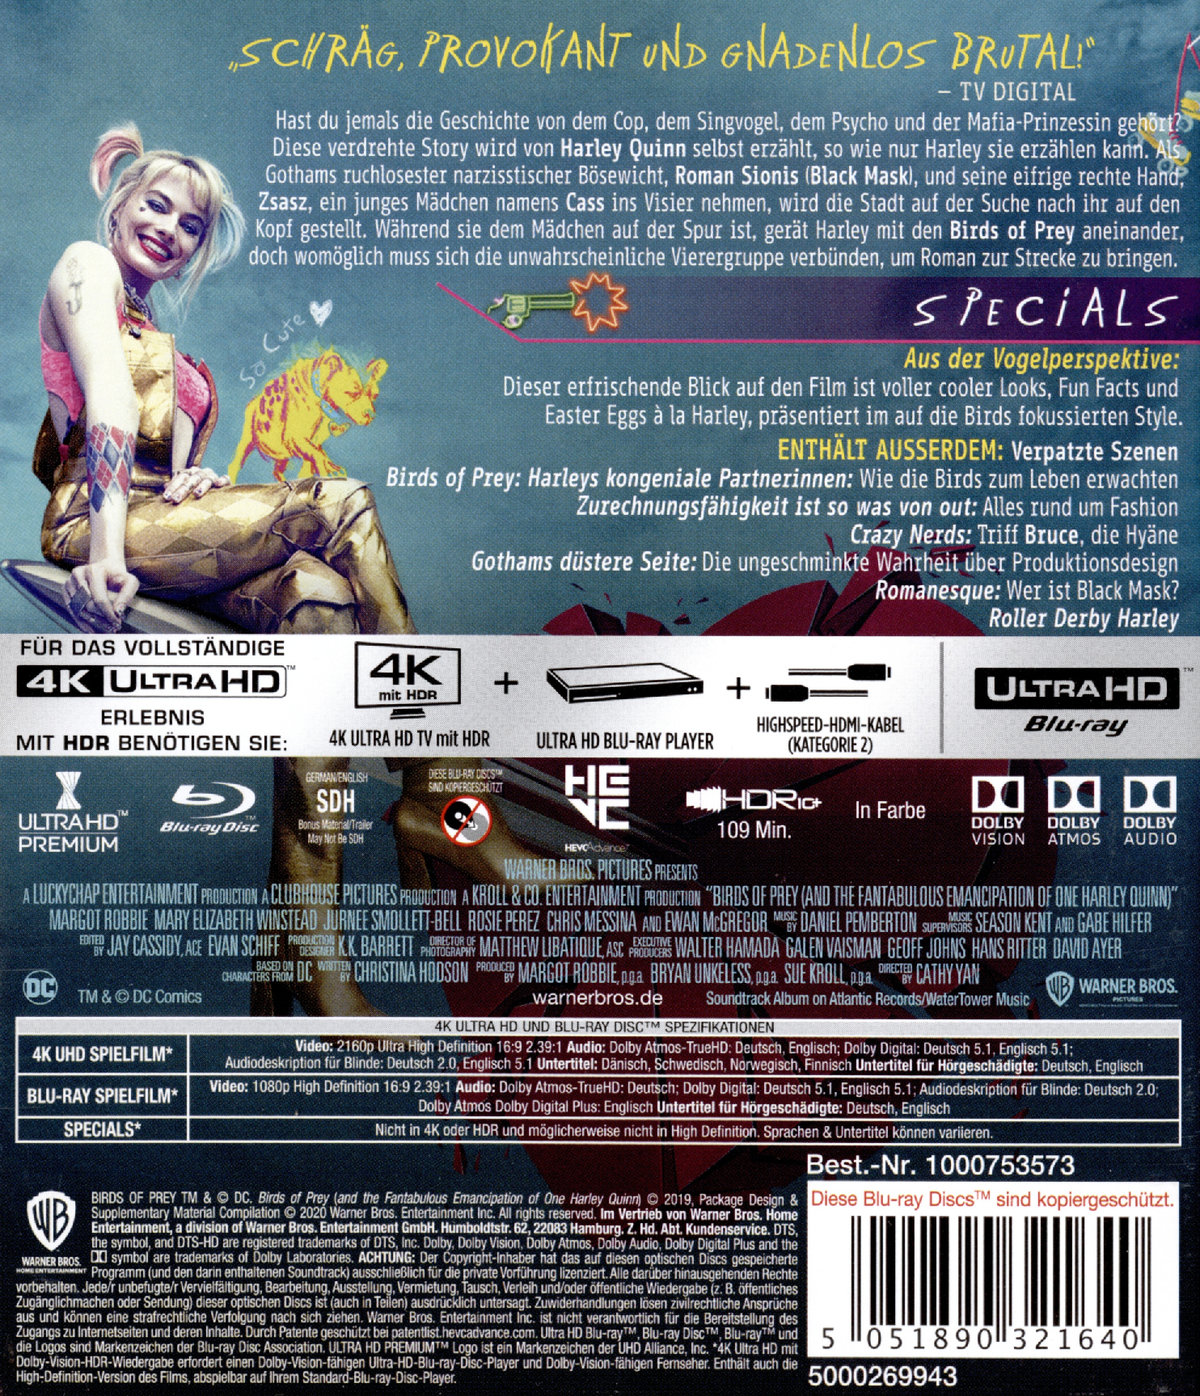 Birds of Prey - The Emancipation of Harley Quinn (4K Ultra HD)